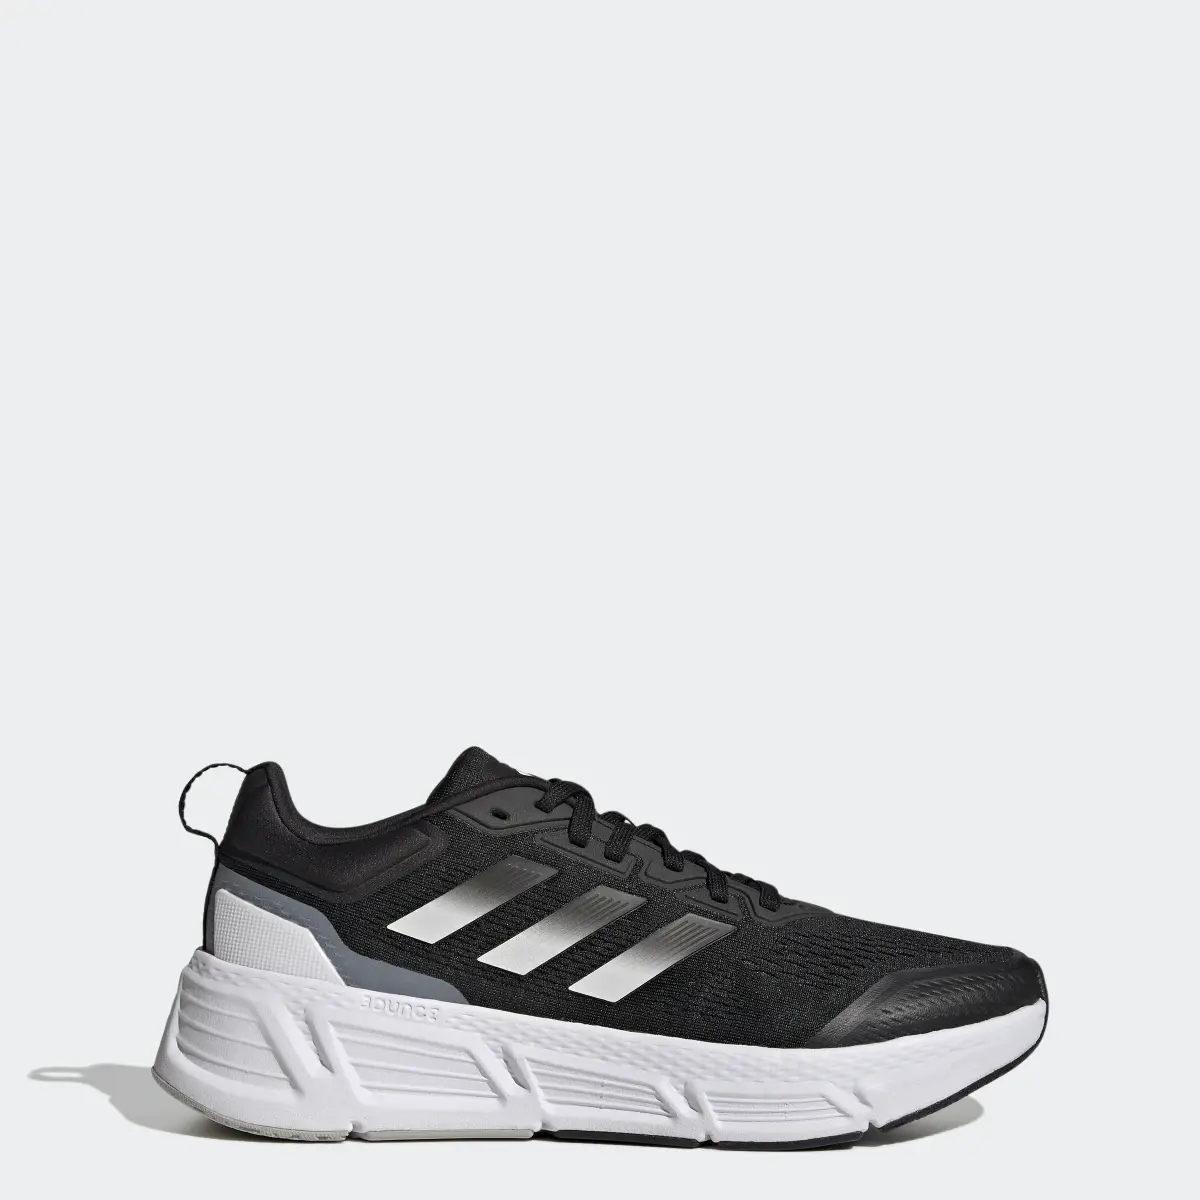 Adidas Questar Running Shoes. 1